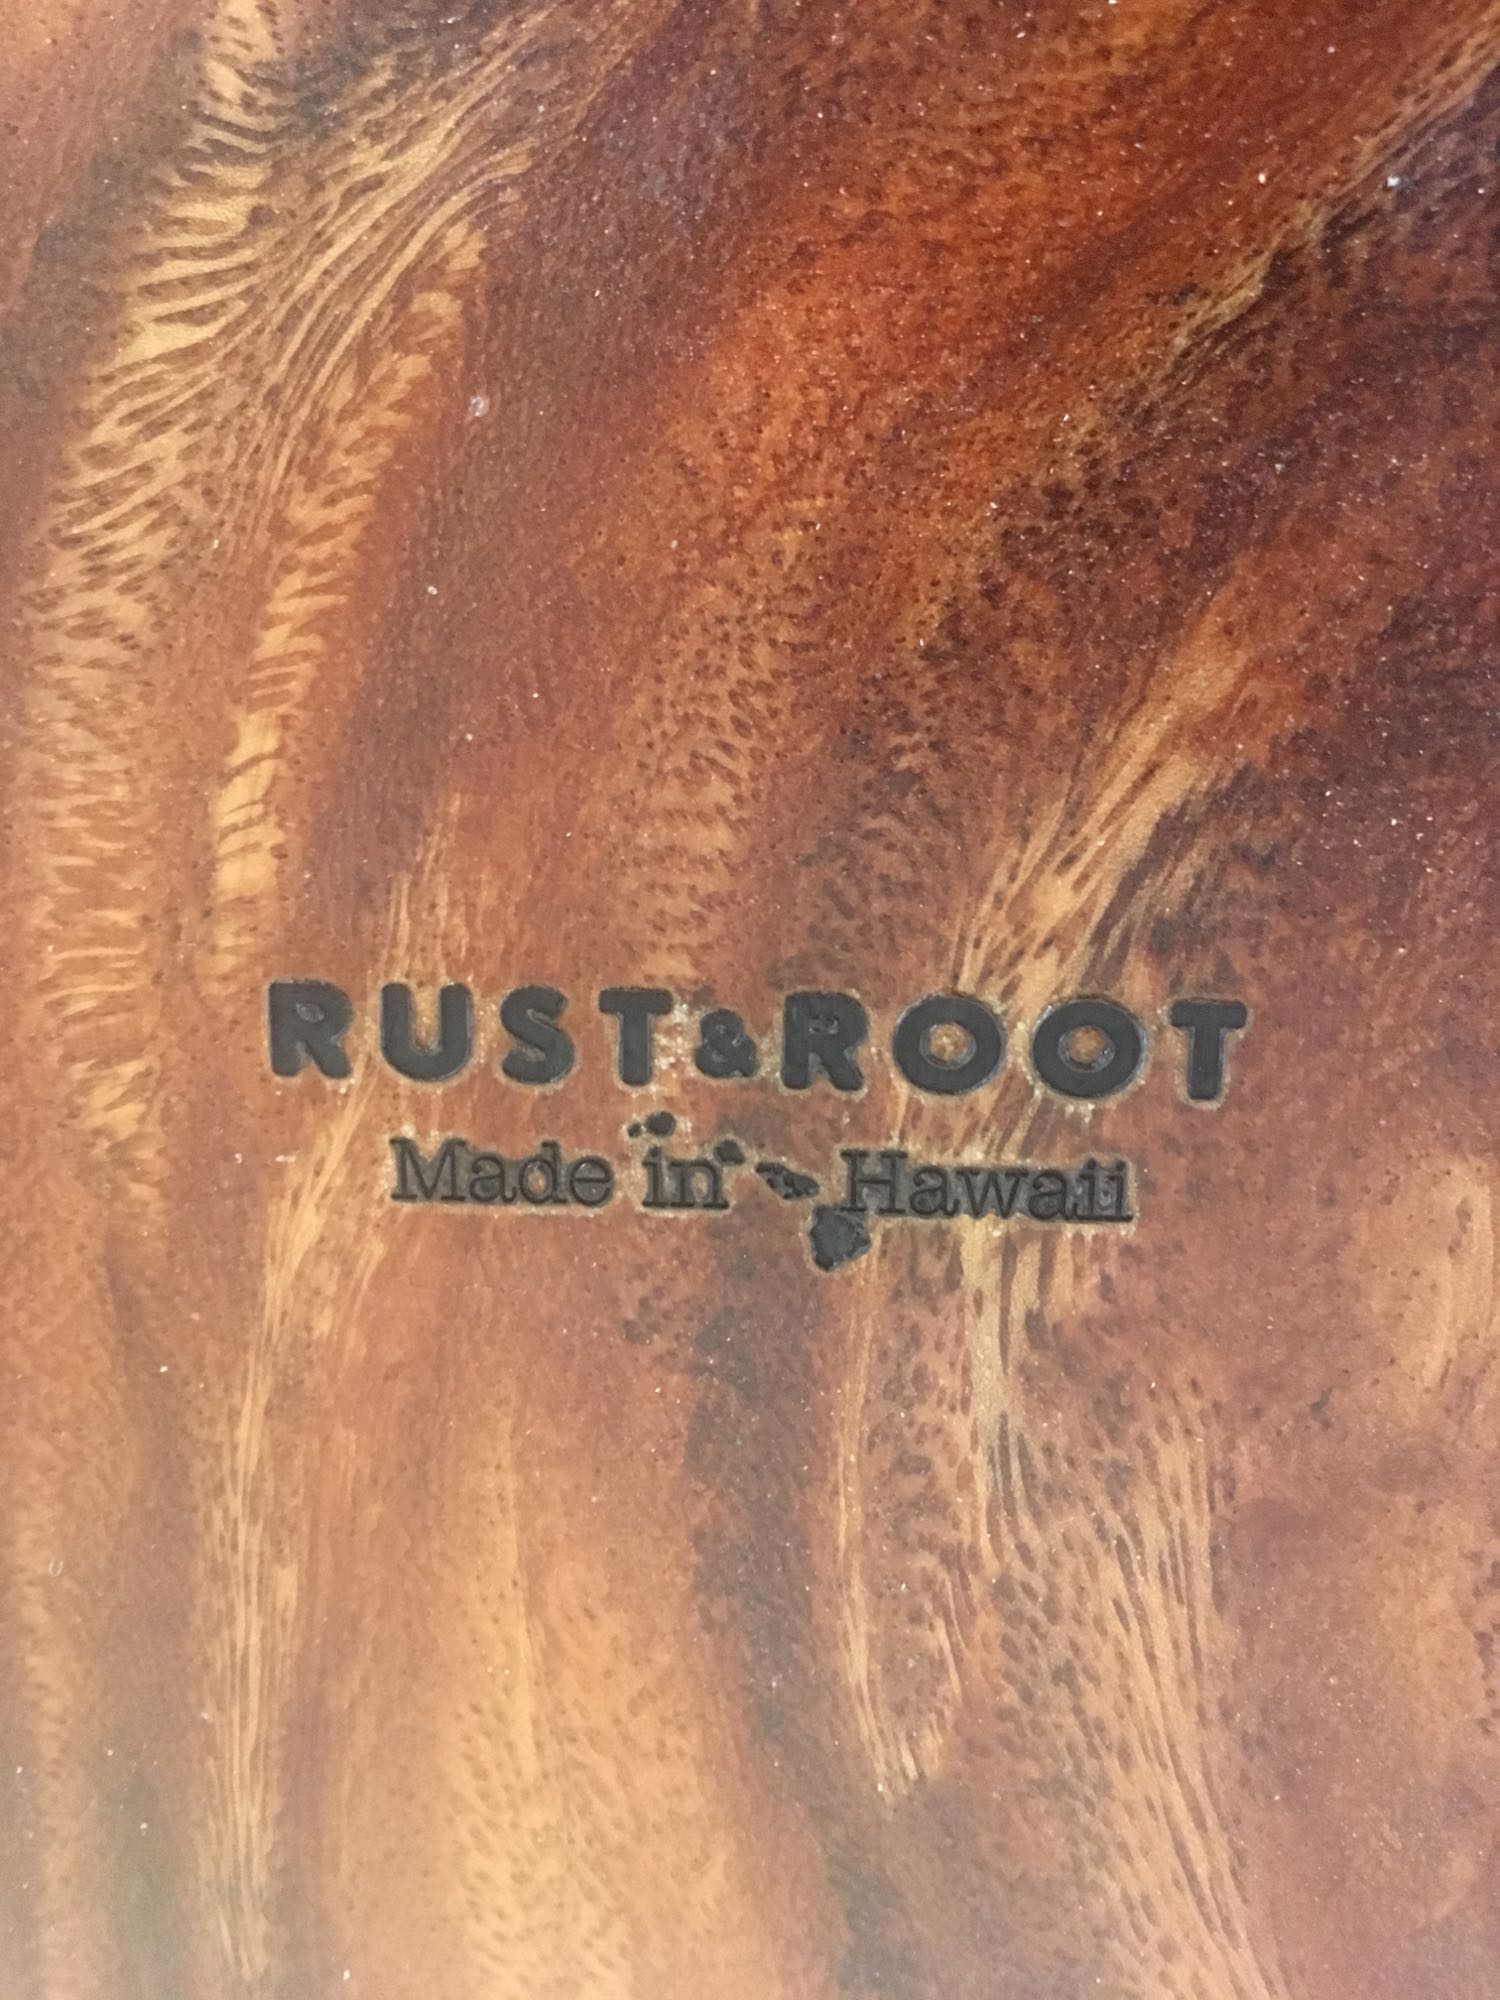 Rust & Root logo branded on the bottom!